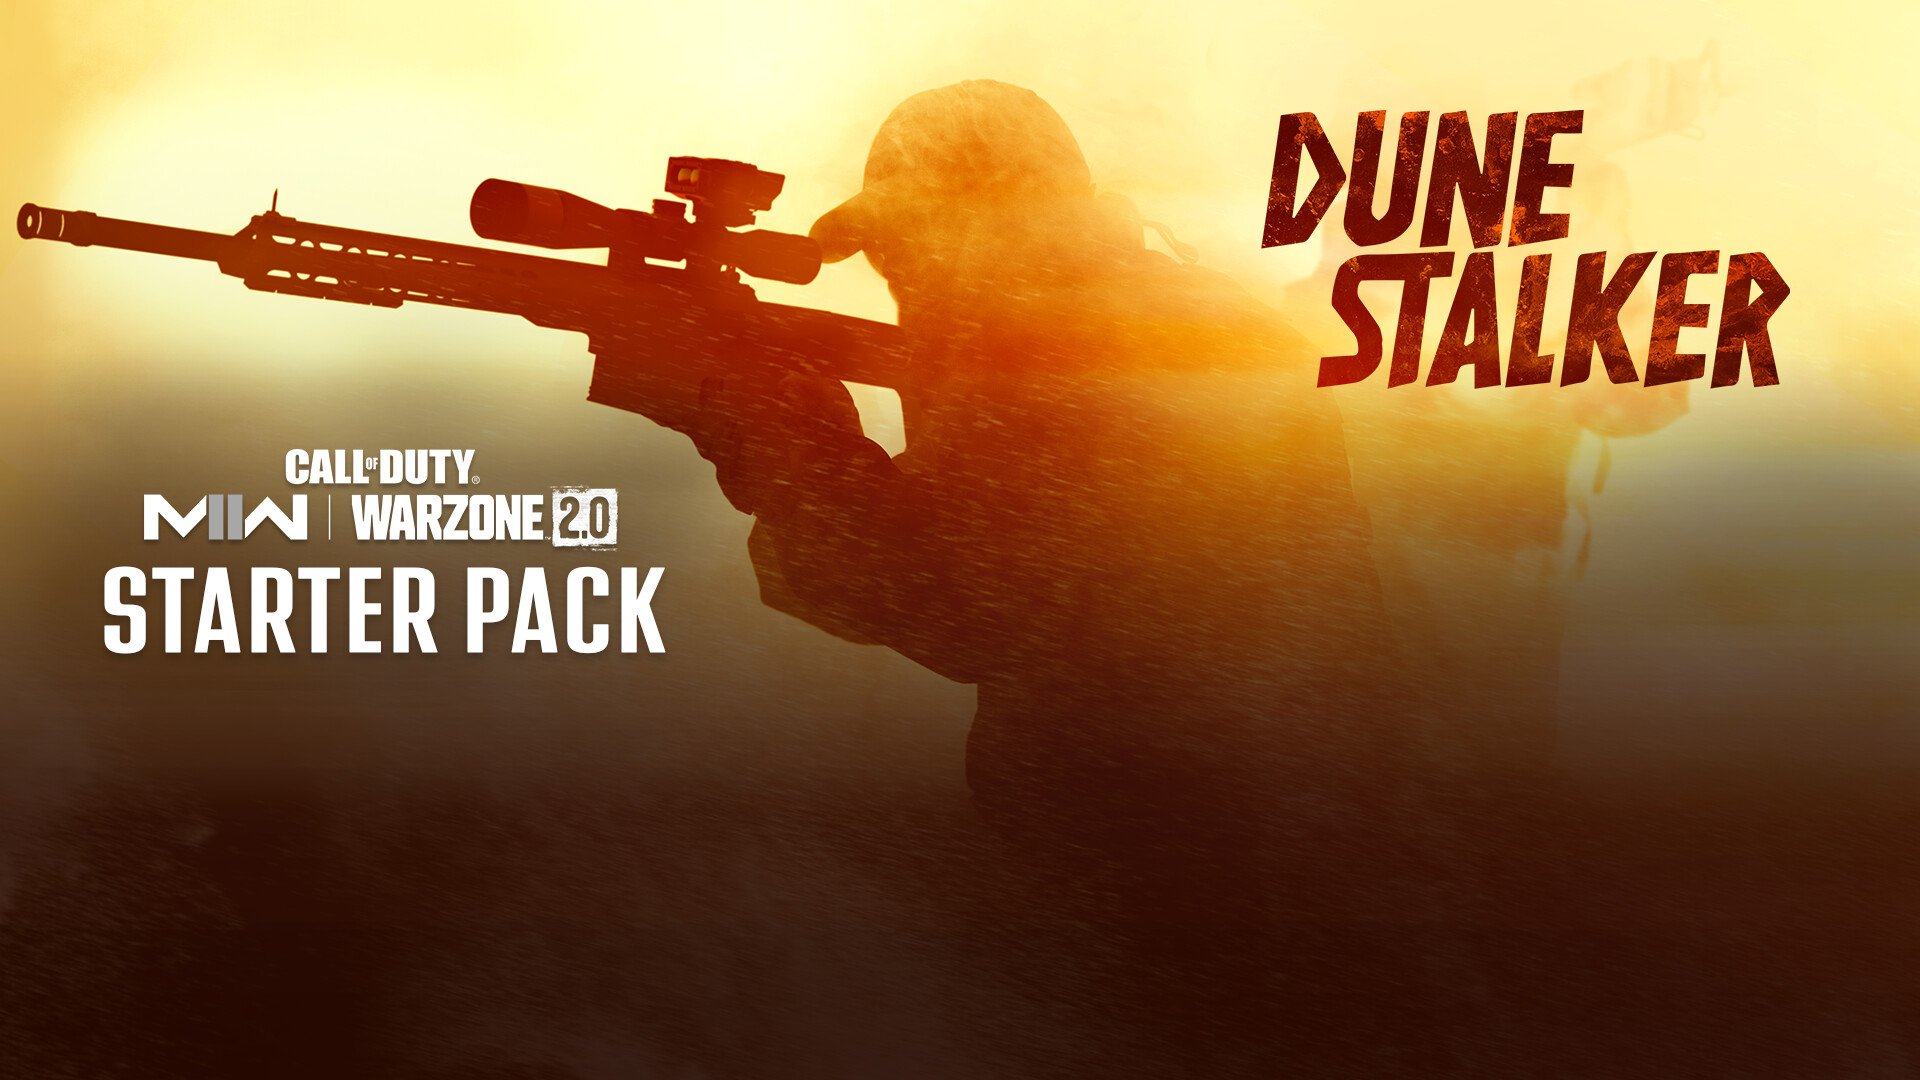 Call of Duty: Modern Warfare II - Dune Stalker: Starter Pack DLC Steam Altergift 13.93 usd